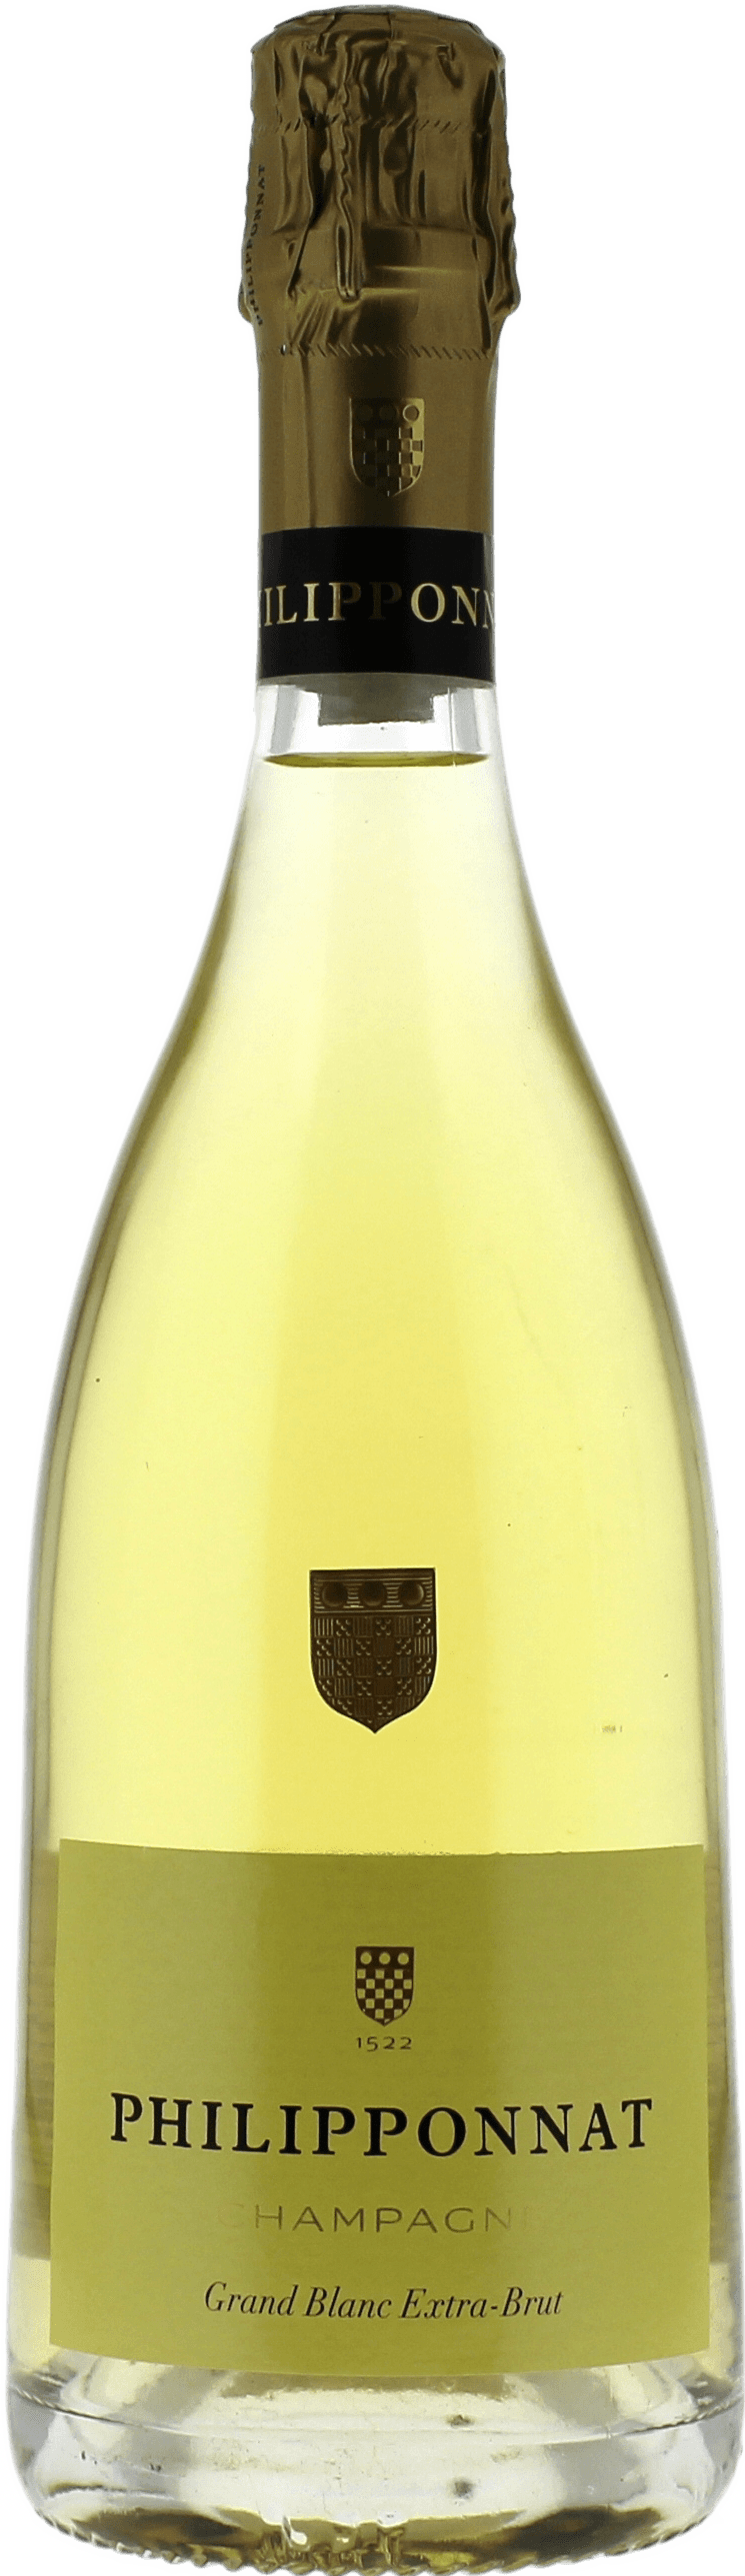 Philipponnat grand blanc (100% chardonnay) 2004  Philipponnat, Champagne